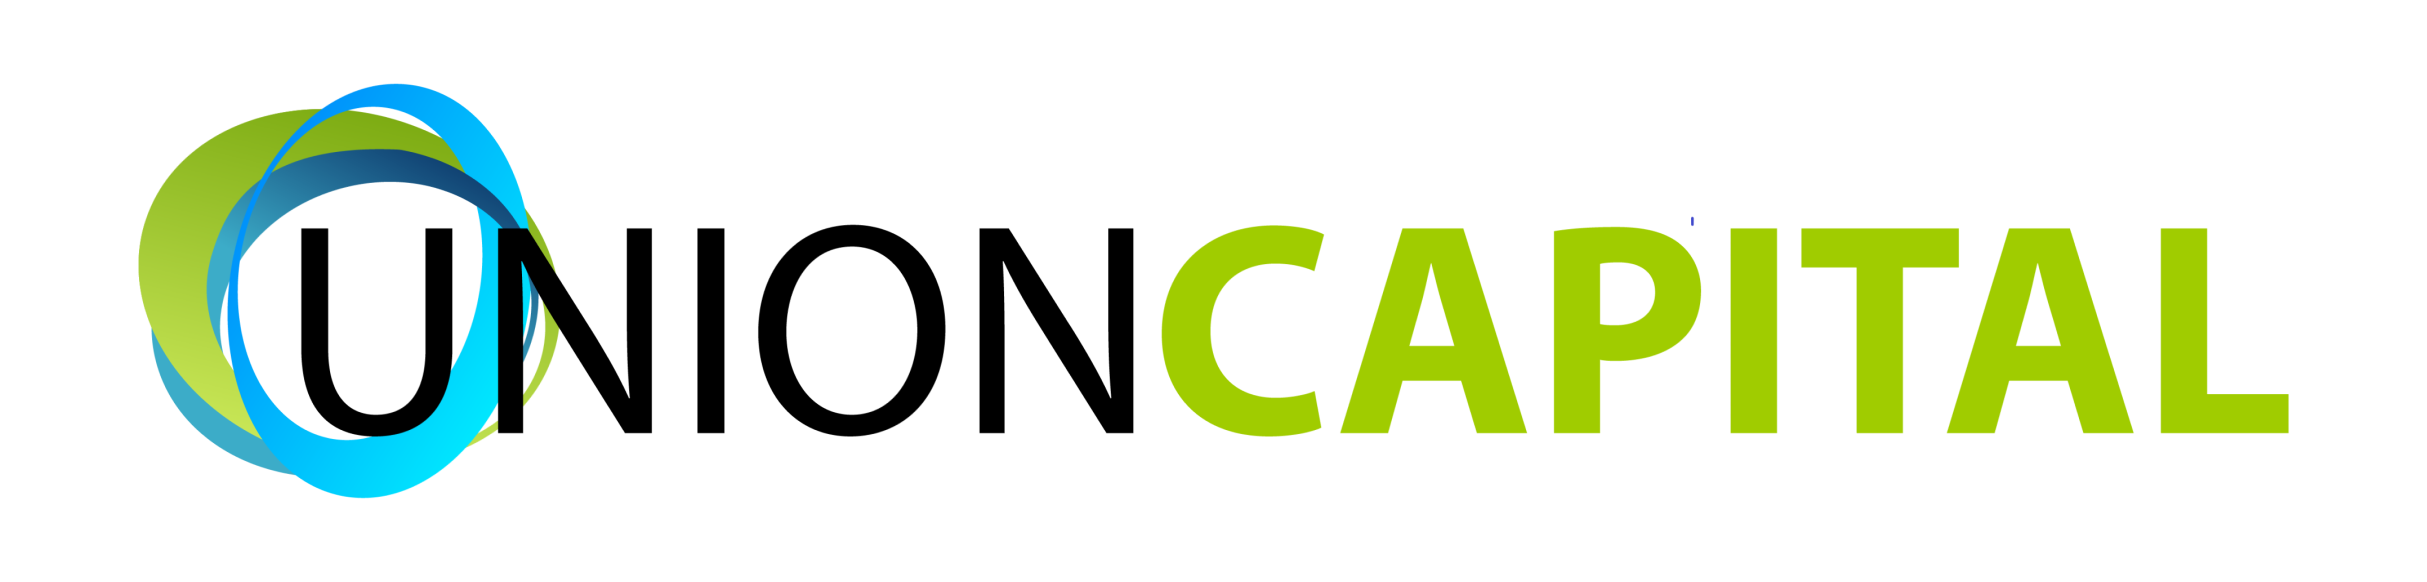 Union Capital logo